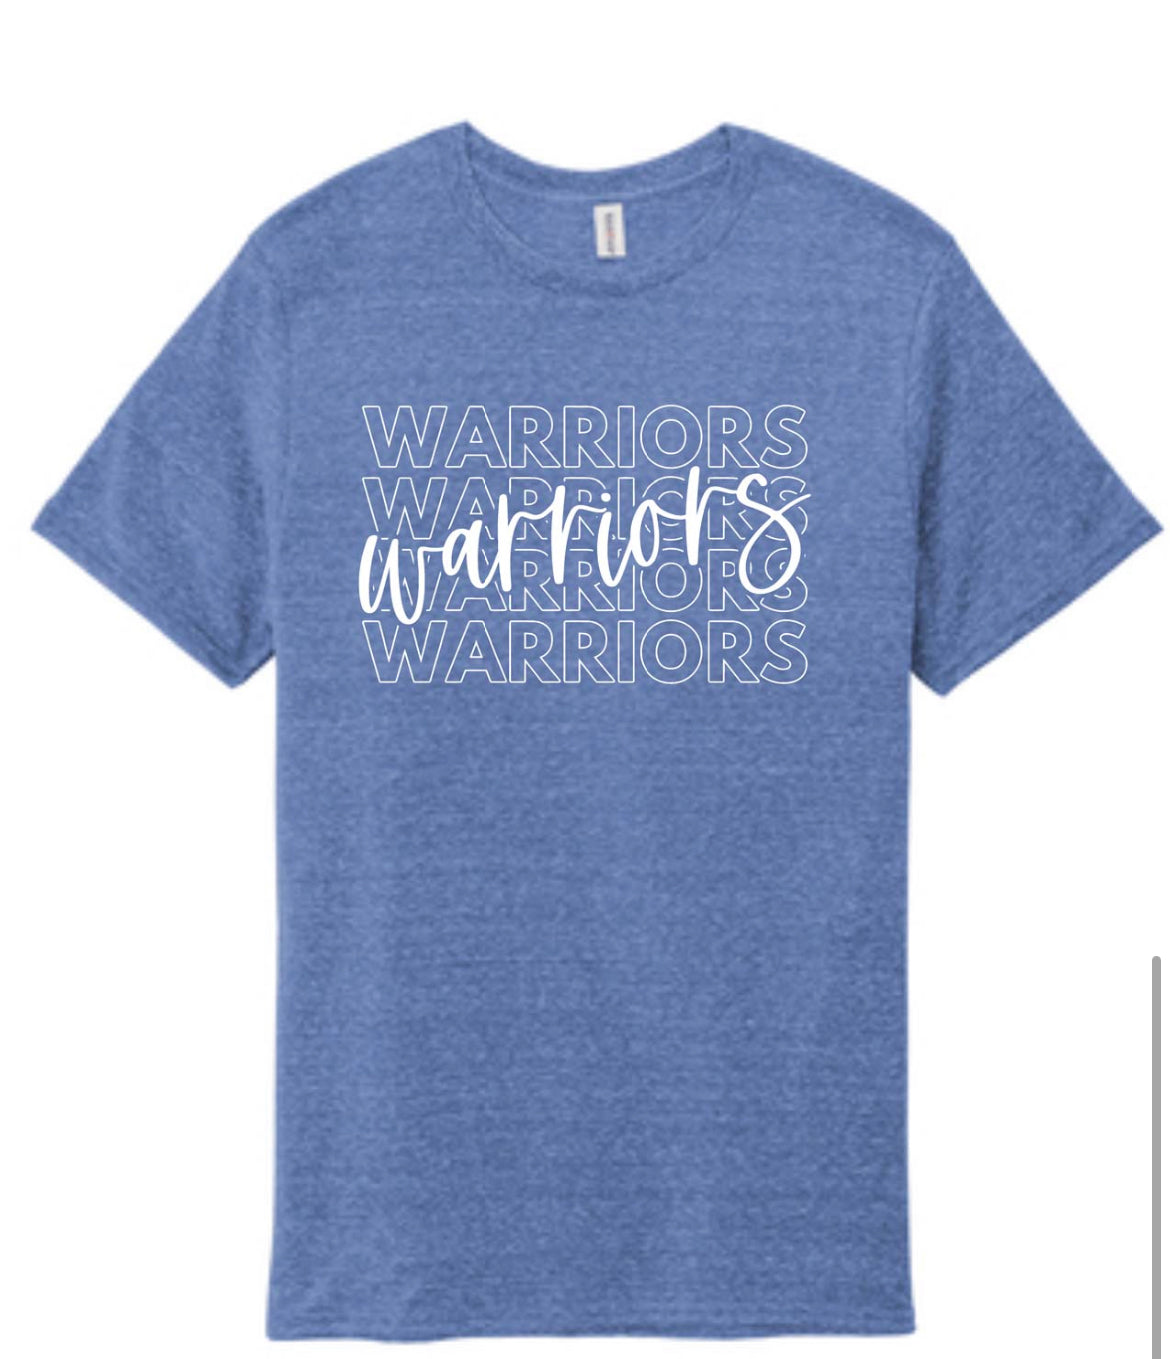 Warriors (repeat design)